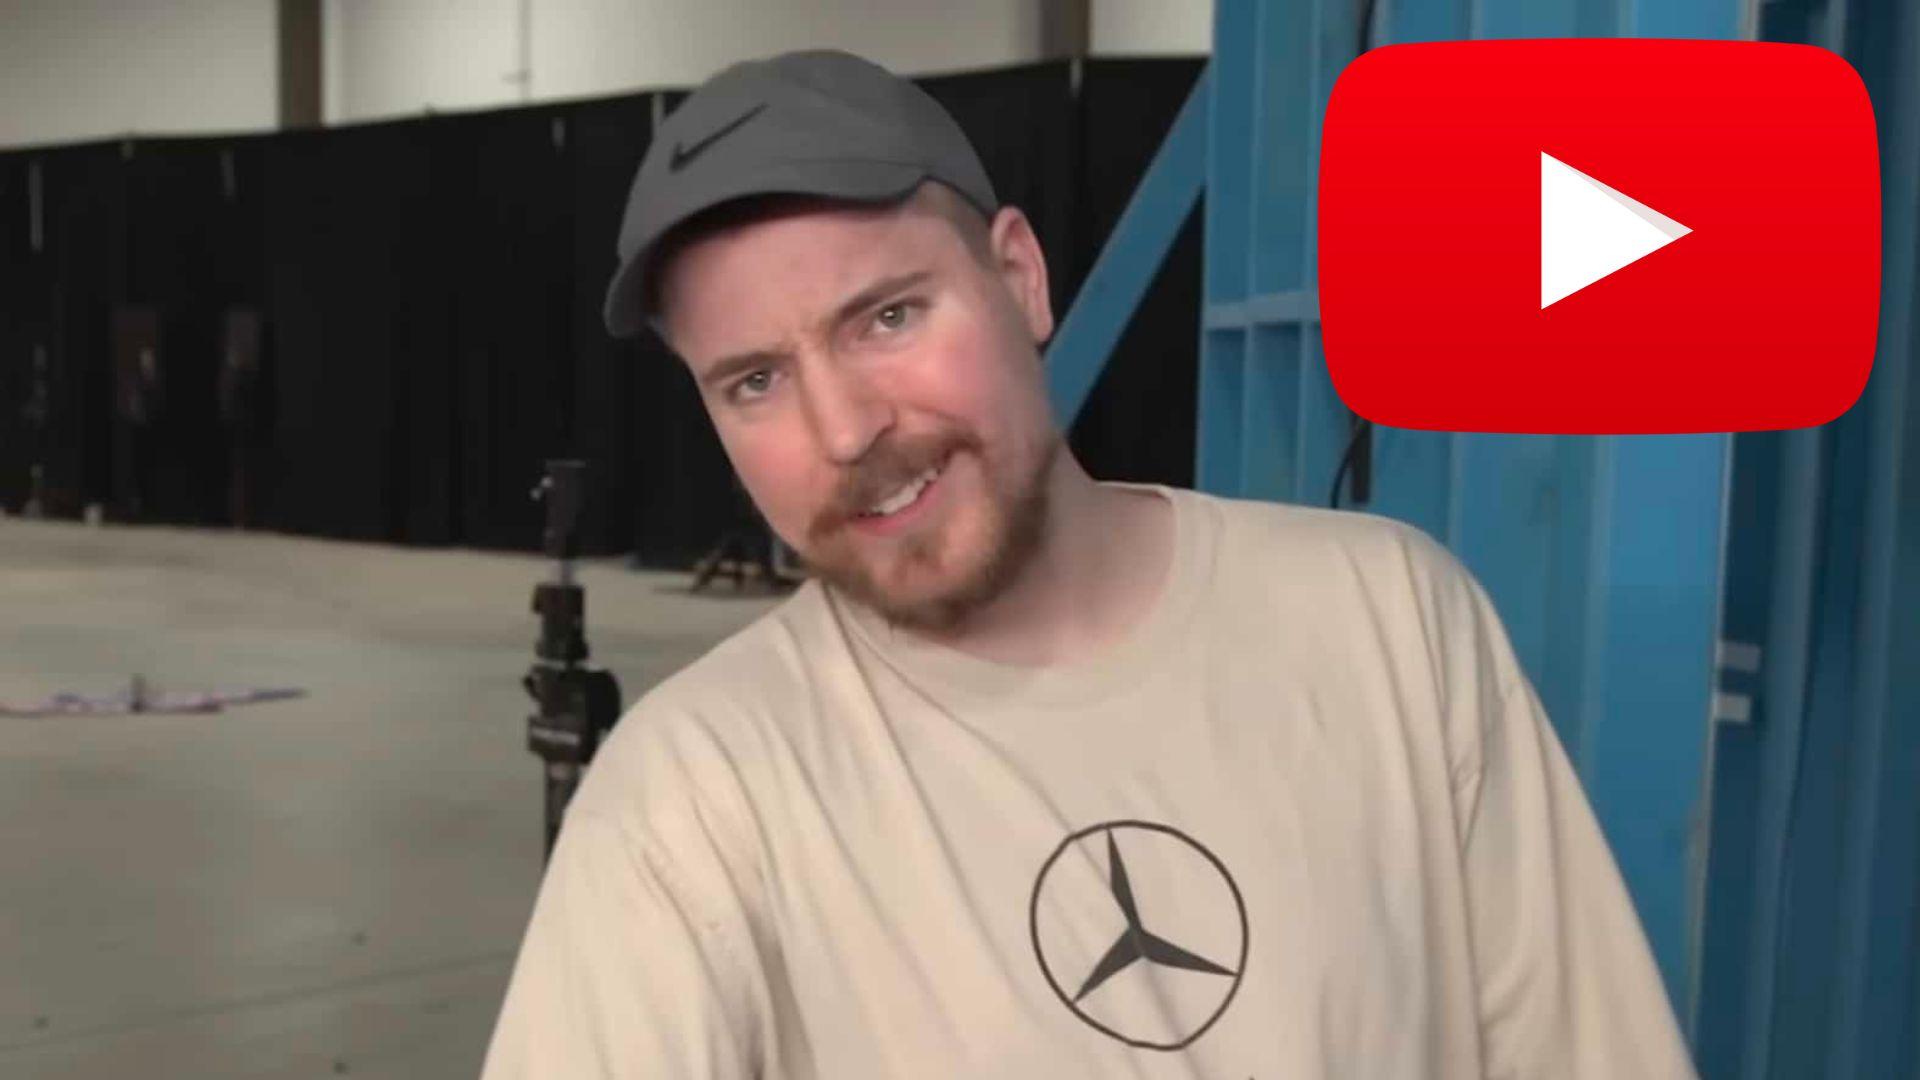 MrBeast in Mercedes Benz shirt next to YouTube logo